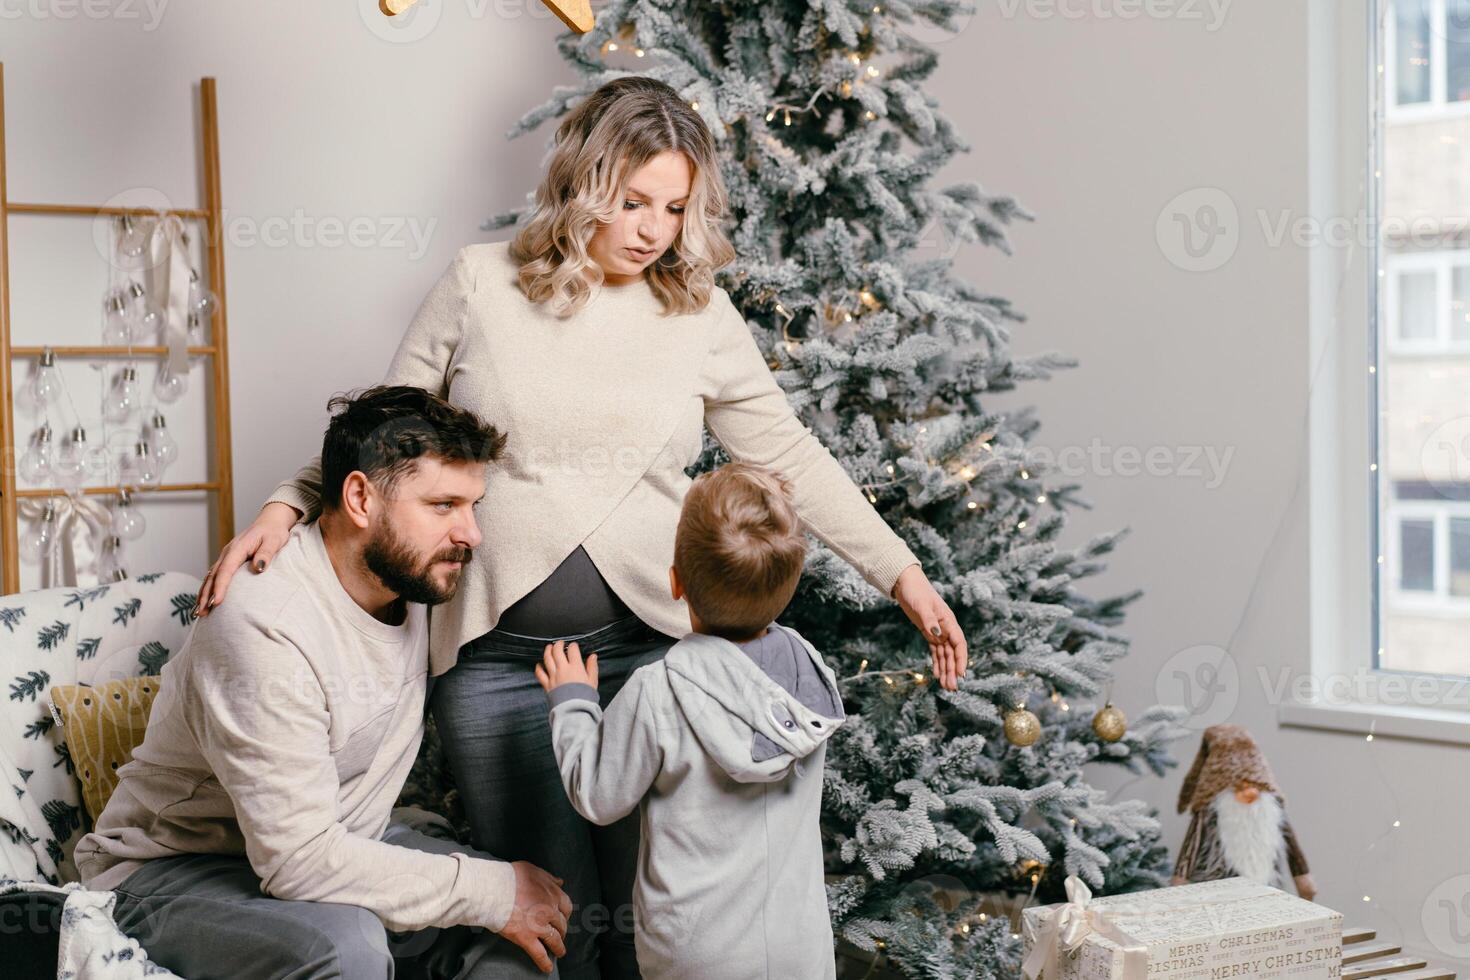 Kerstmis familie geluk portret van pa, zwanger mam en weinig zoon zittend fauteuil Bij huis in de buurt Kerstmis boom knuffel glimlach foto